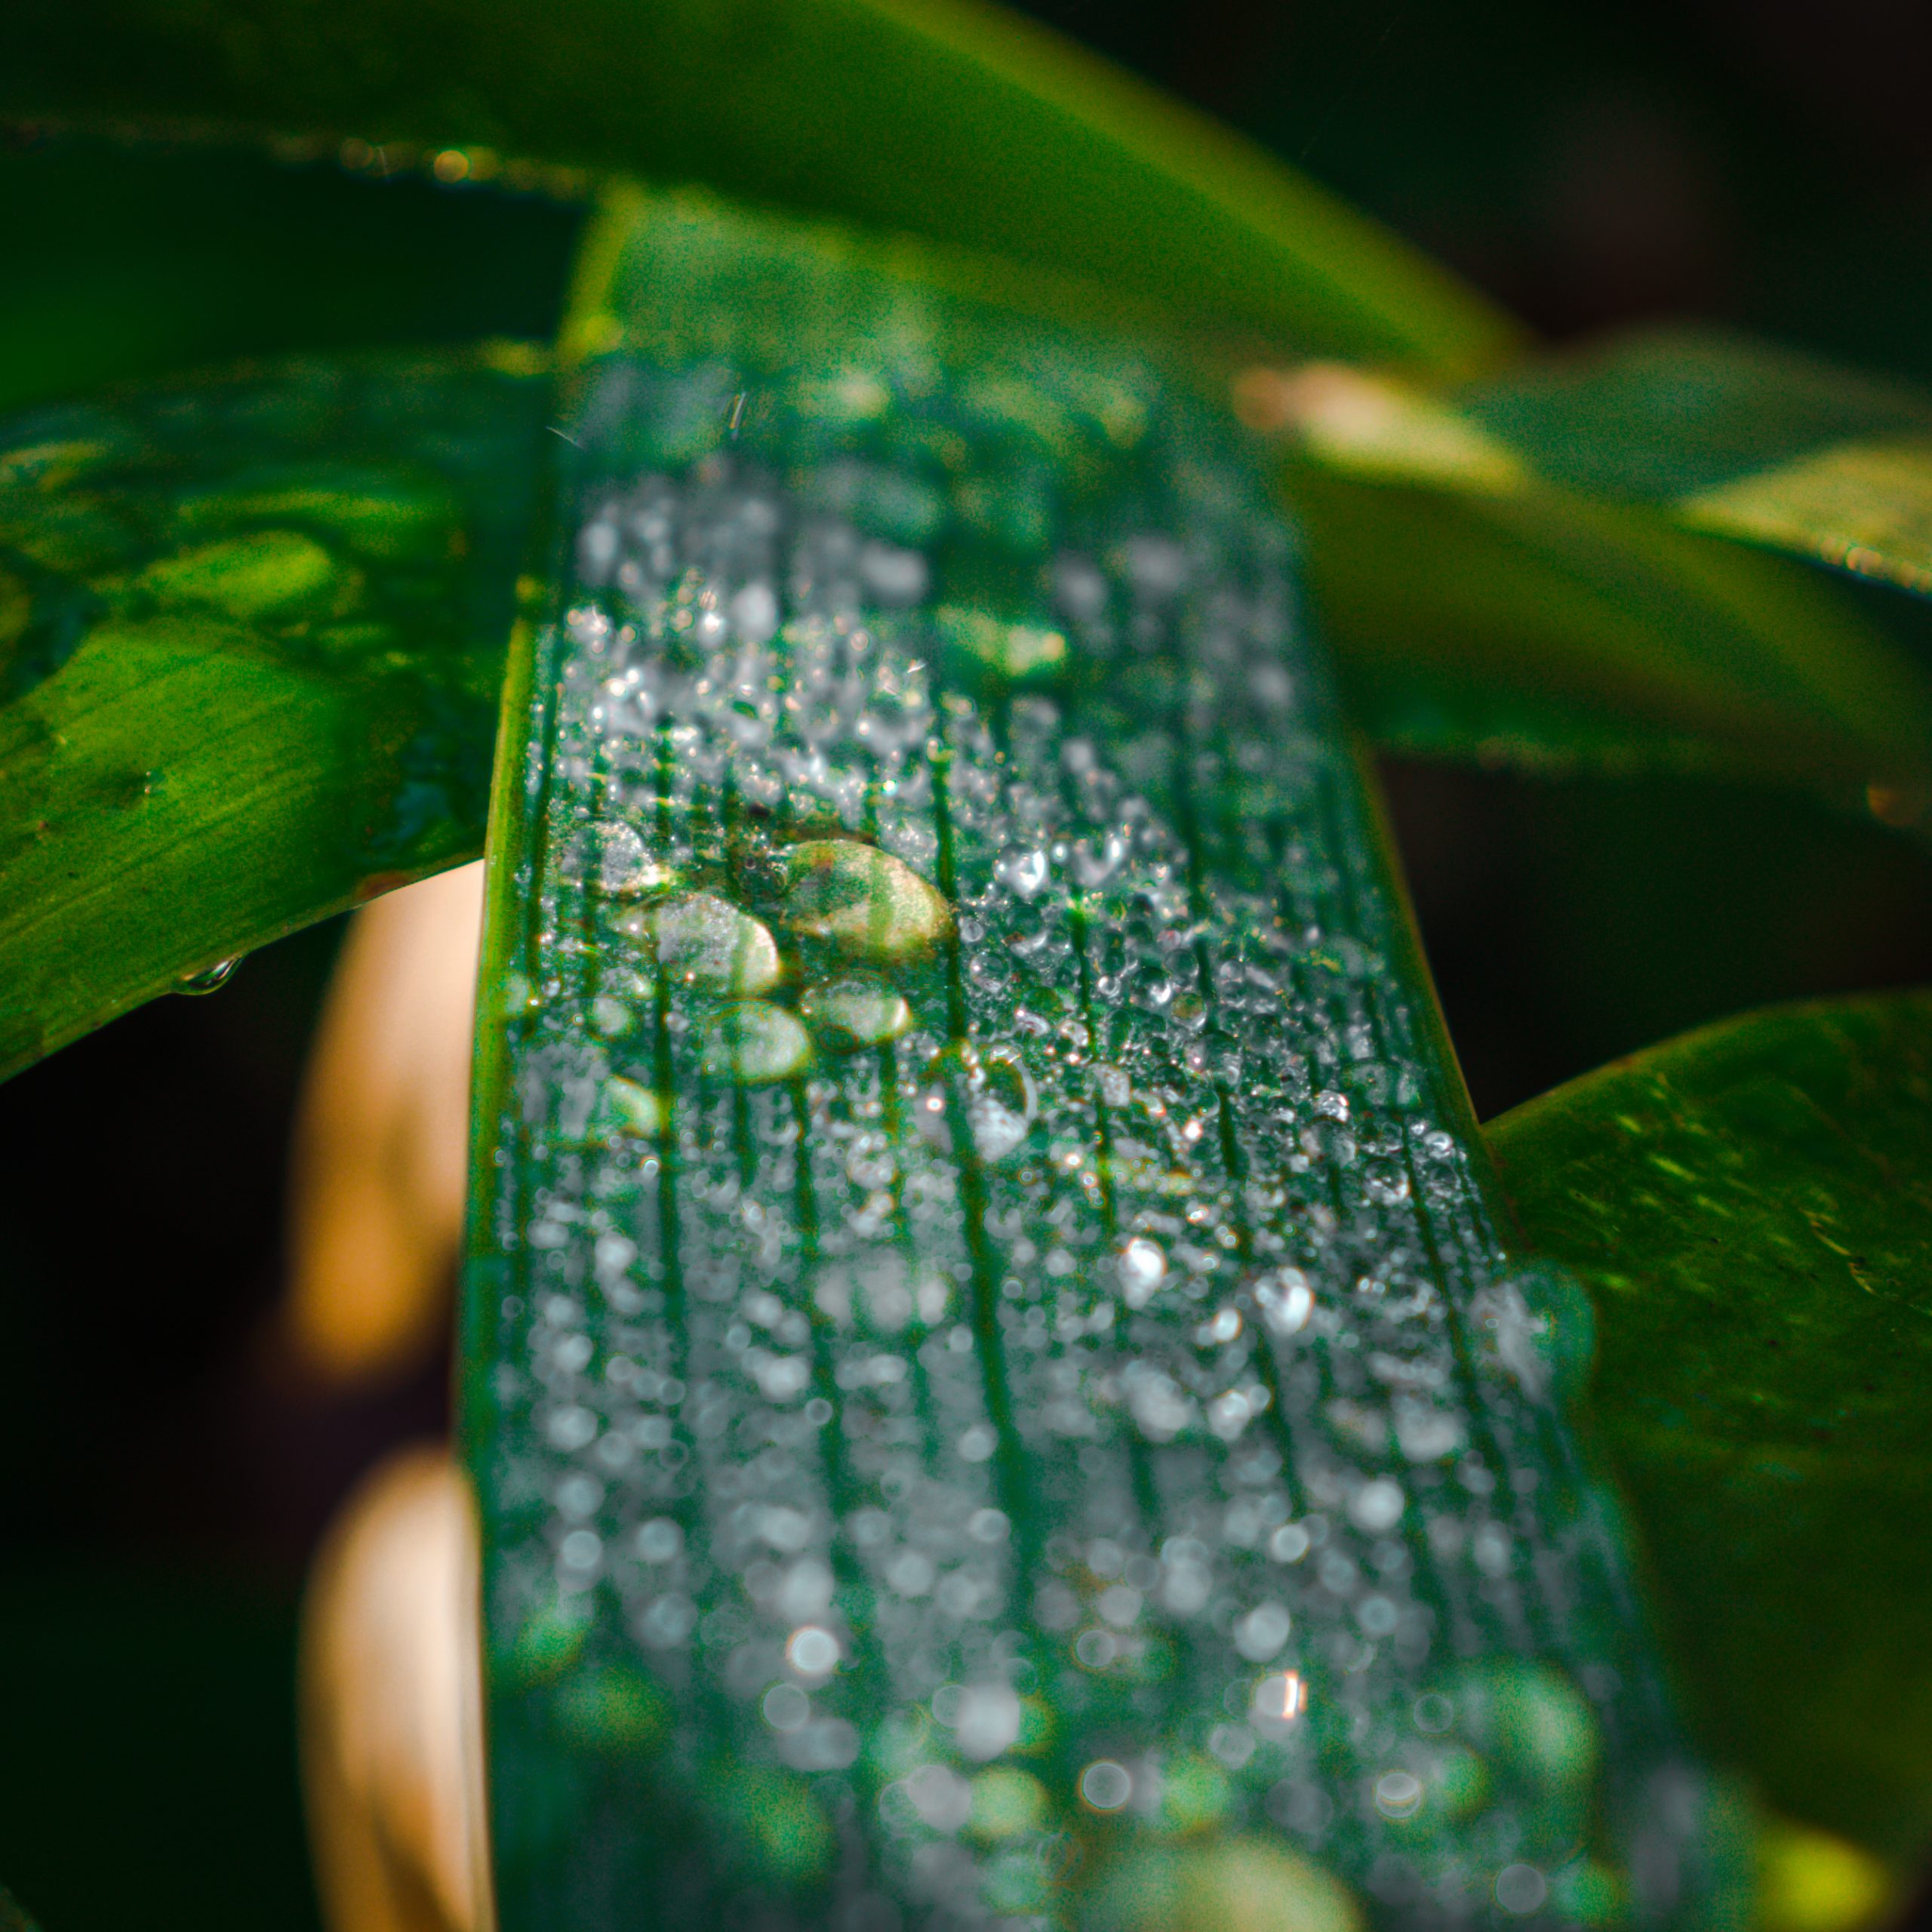 Drops on plant leaf